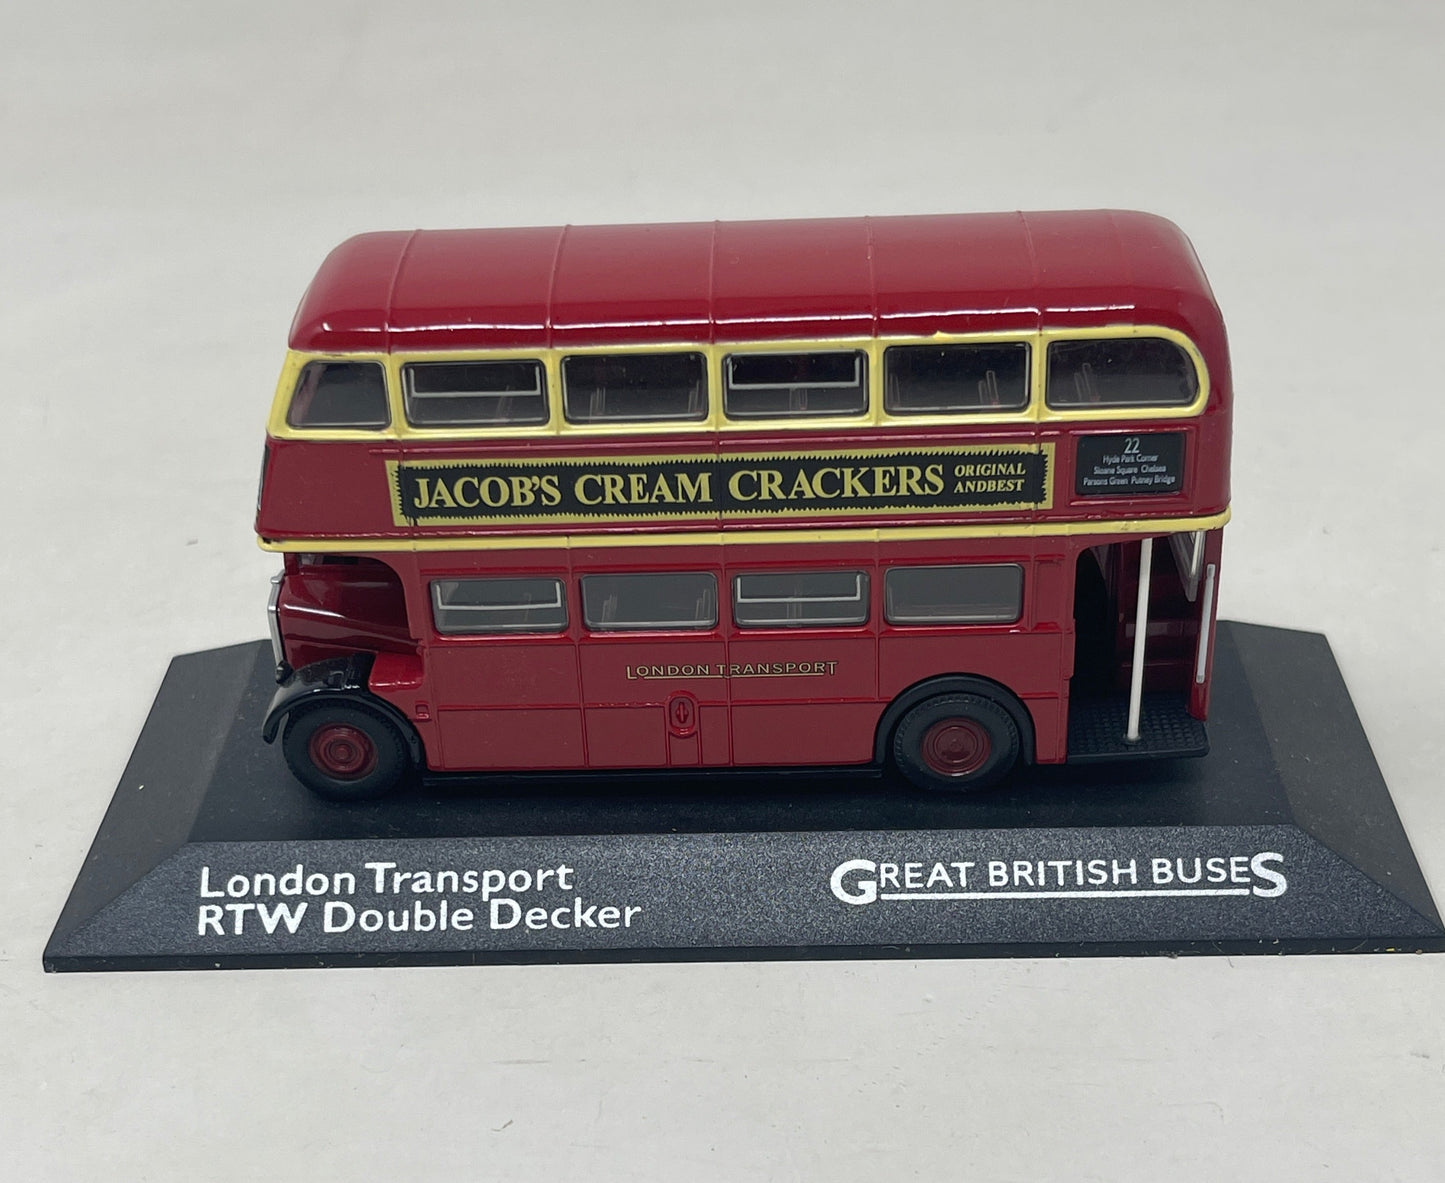 Die Cast 1:76 Scale London Transport RTW Double Decker Bus